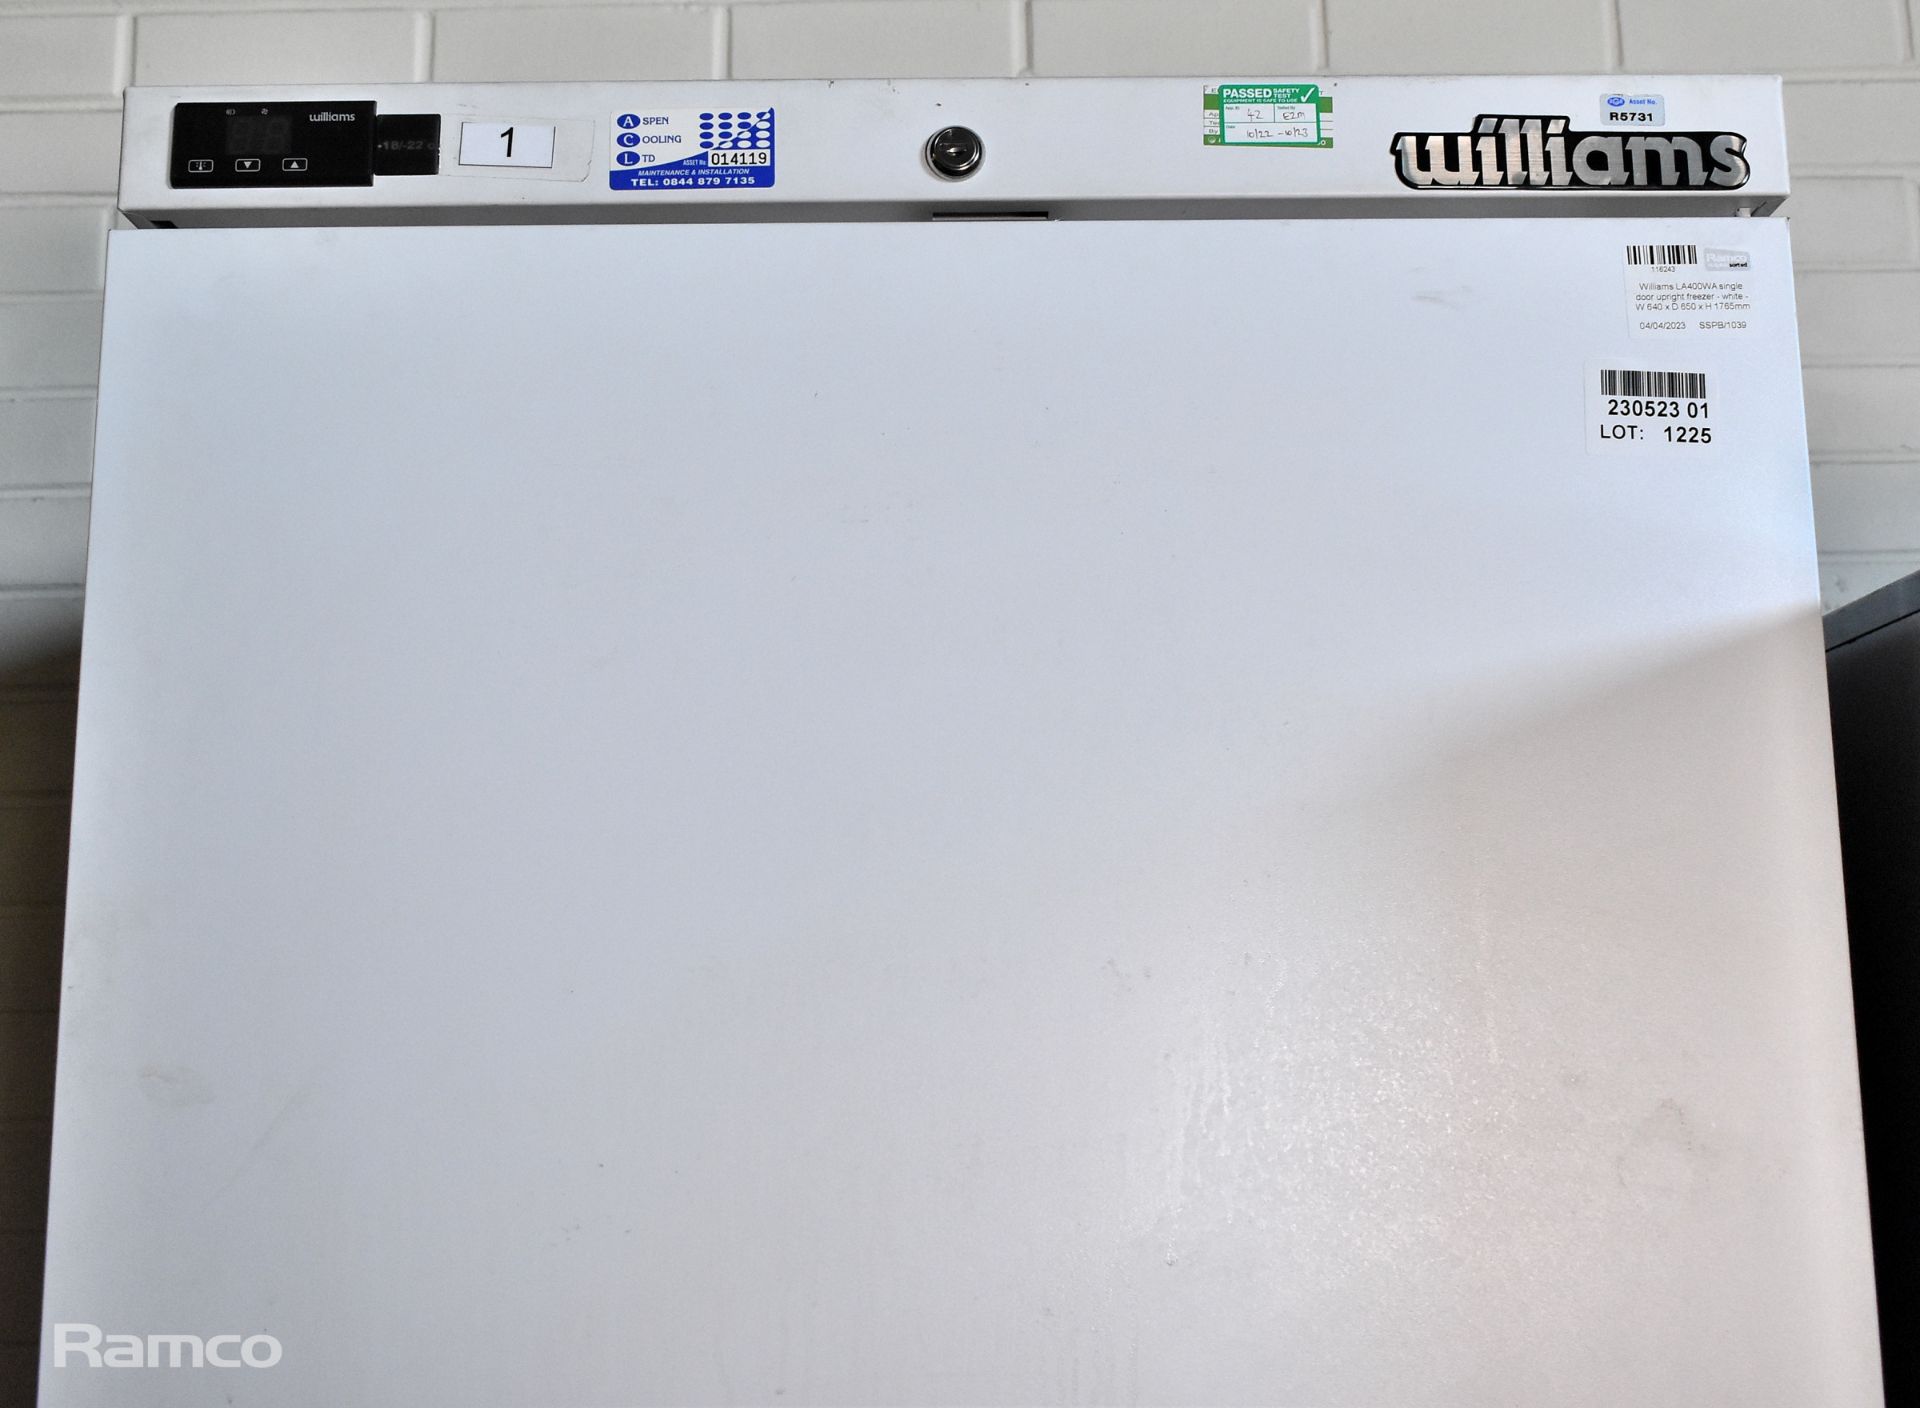 Williams LA400WA single door upright freezer - white - W 640 x D 650 x H 1765mm - Image 2 of 7